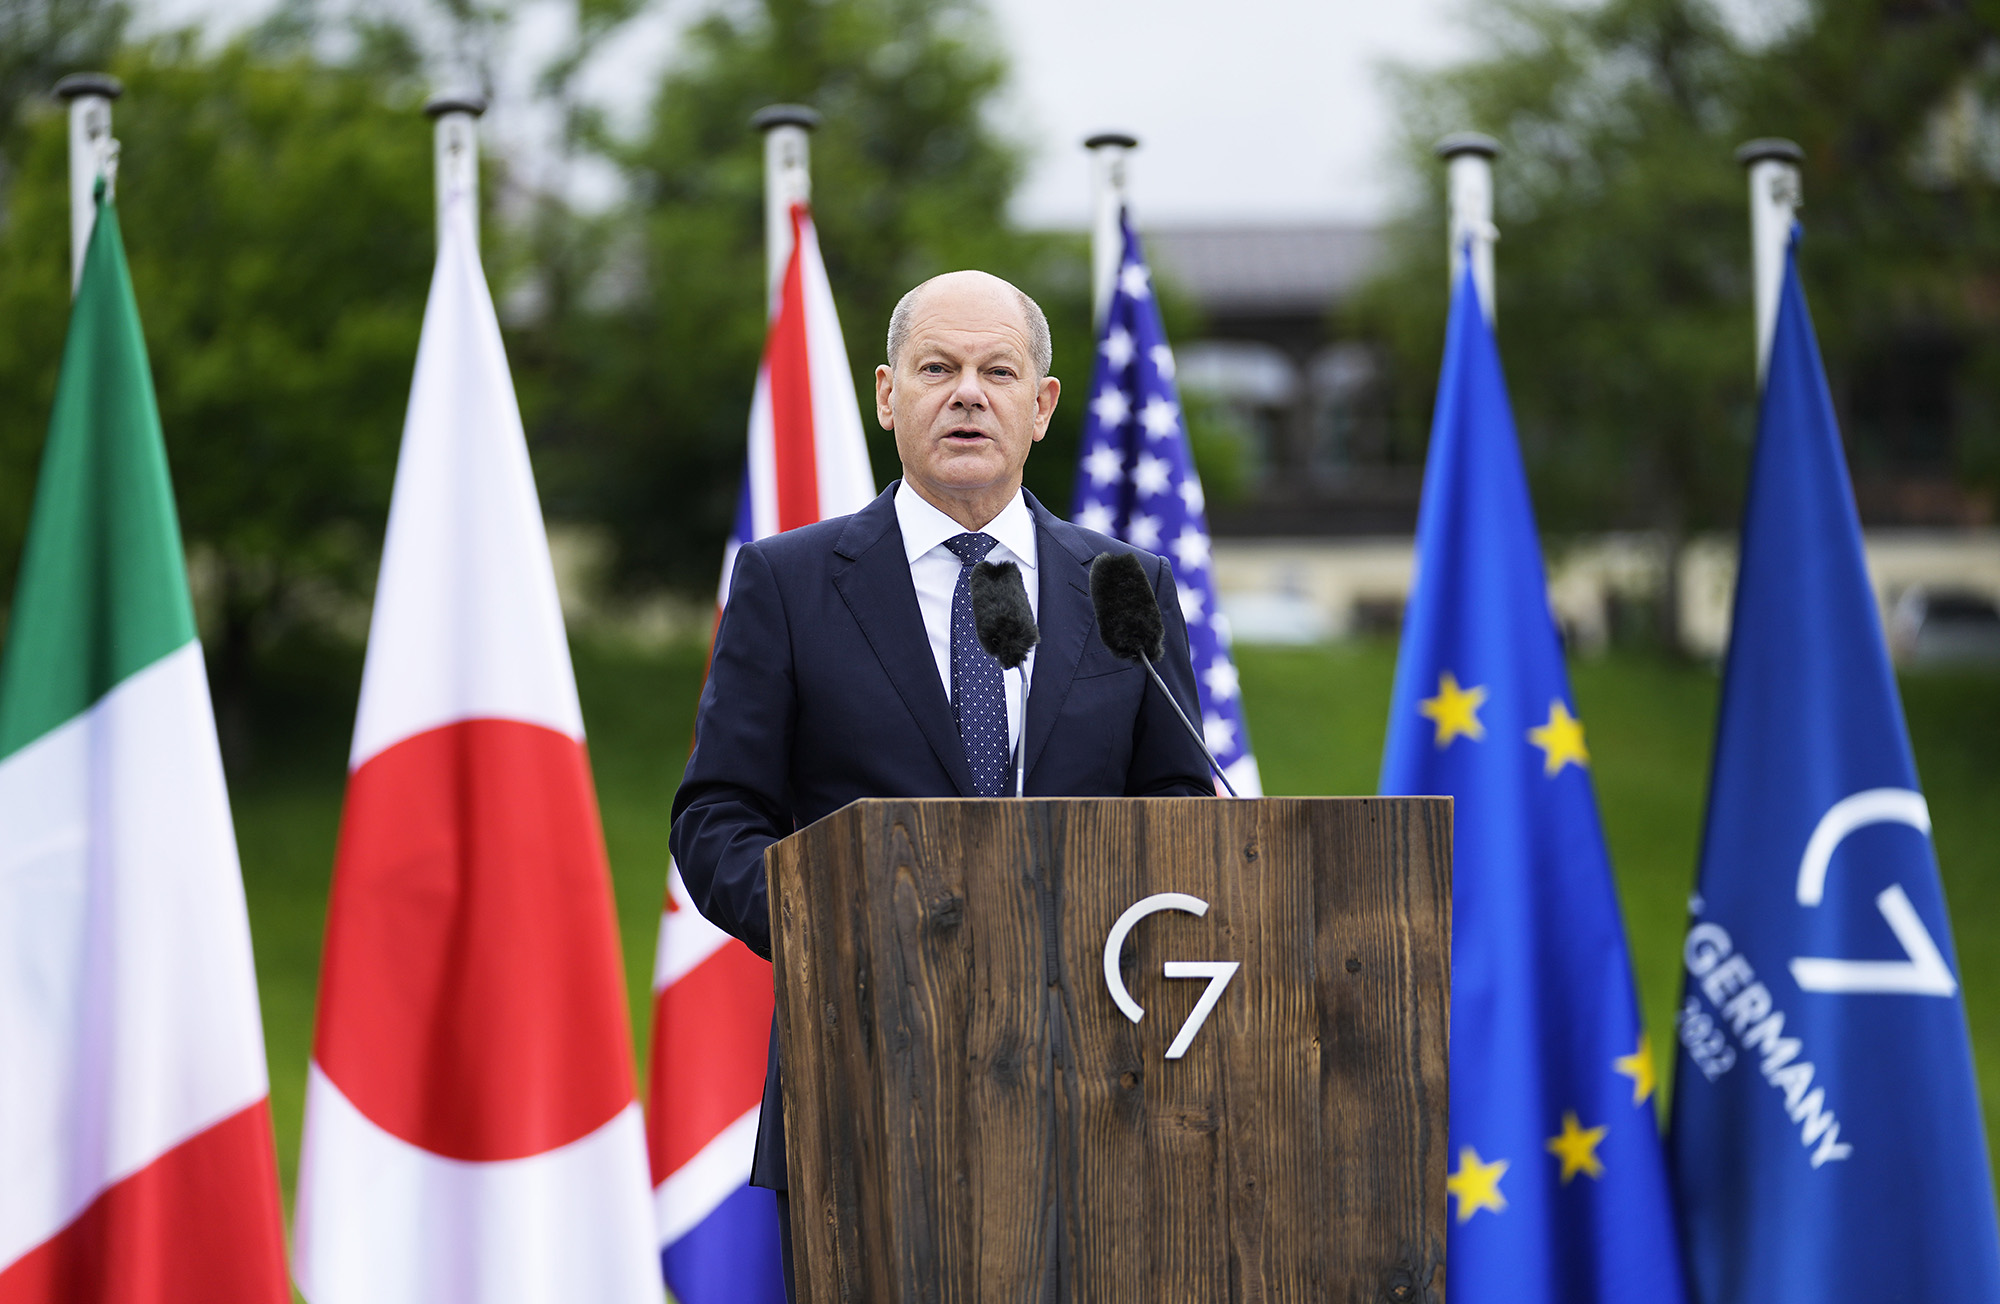 German Chancellor Olaf Scholz speaks during a media conference at the G7 venue, Castle Elmau, in Kruen, Germany, on June 28.